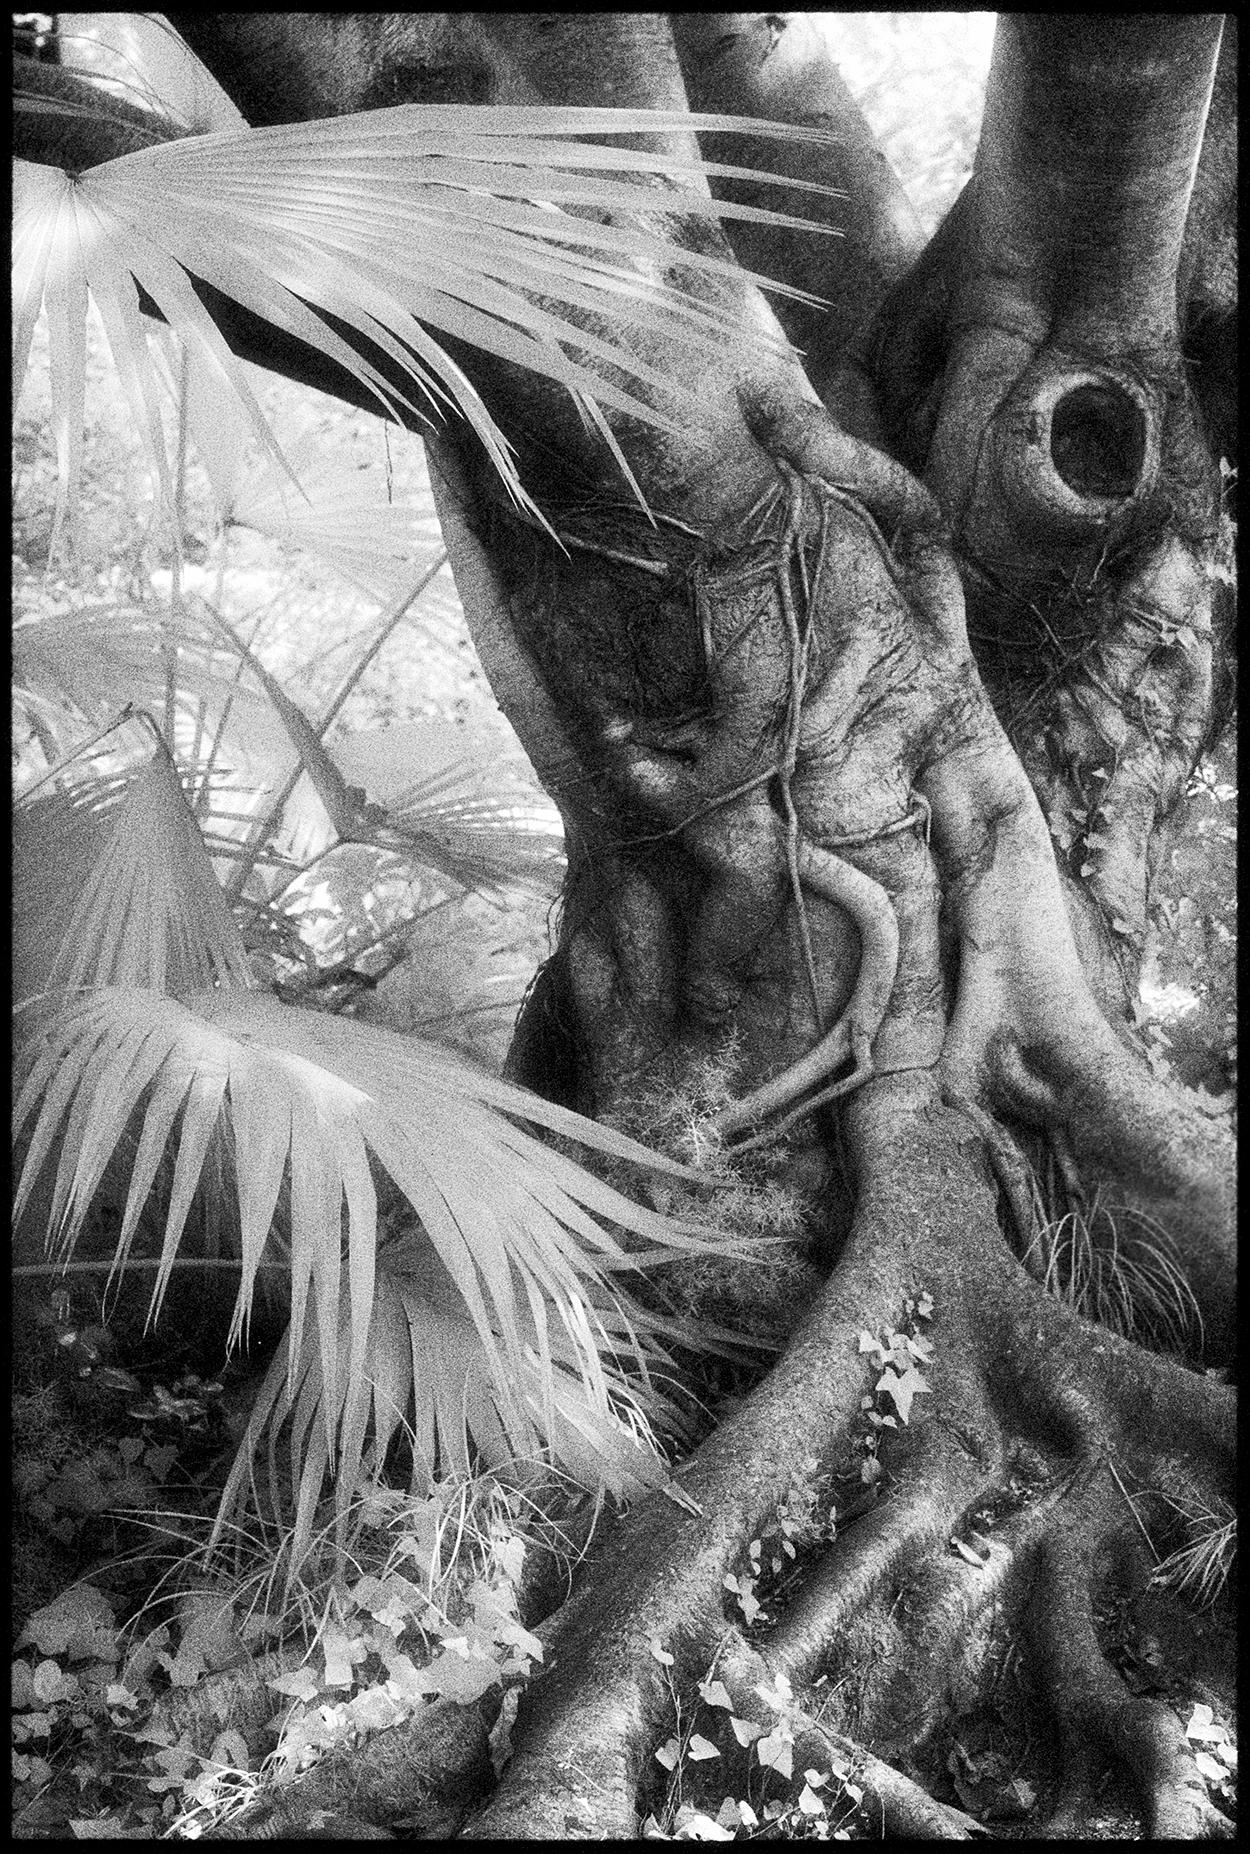 Edward Alfano Landscape Photograph - Chengdu, China - Black & White Photograph of Banyan Tree Landscape with Palms